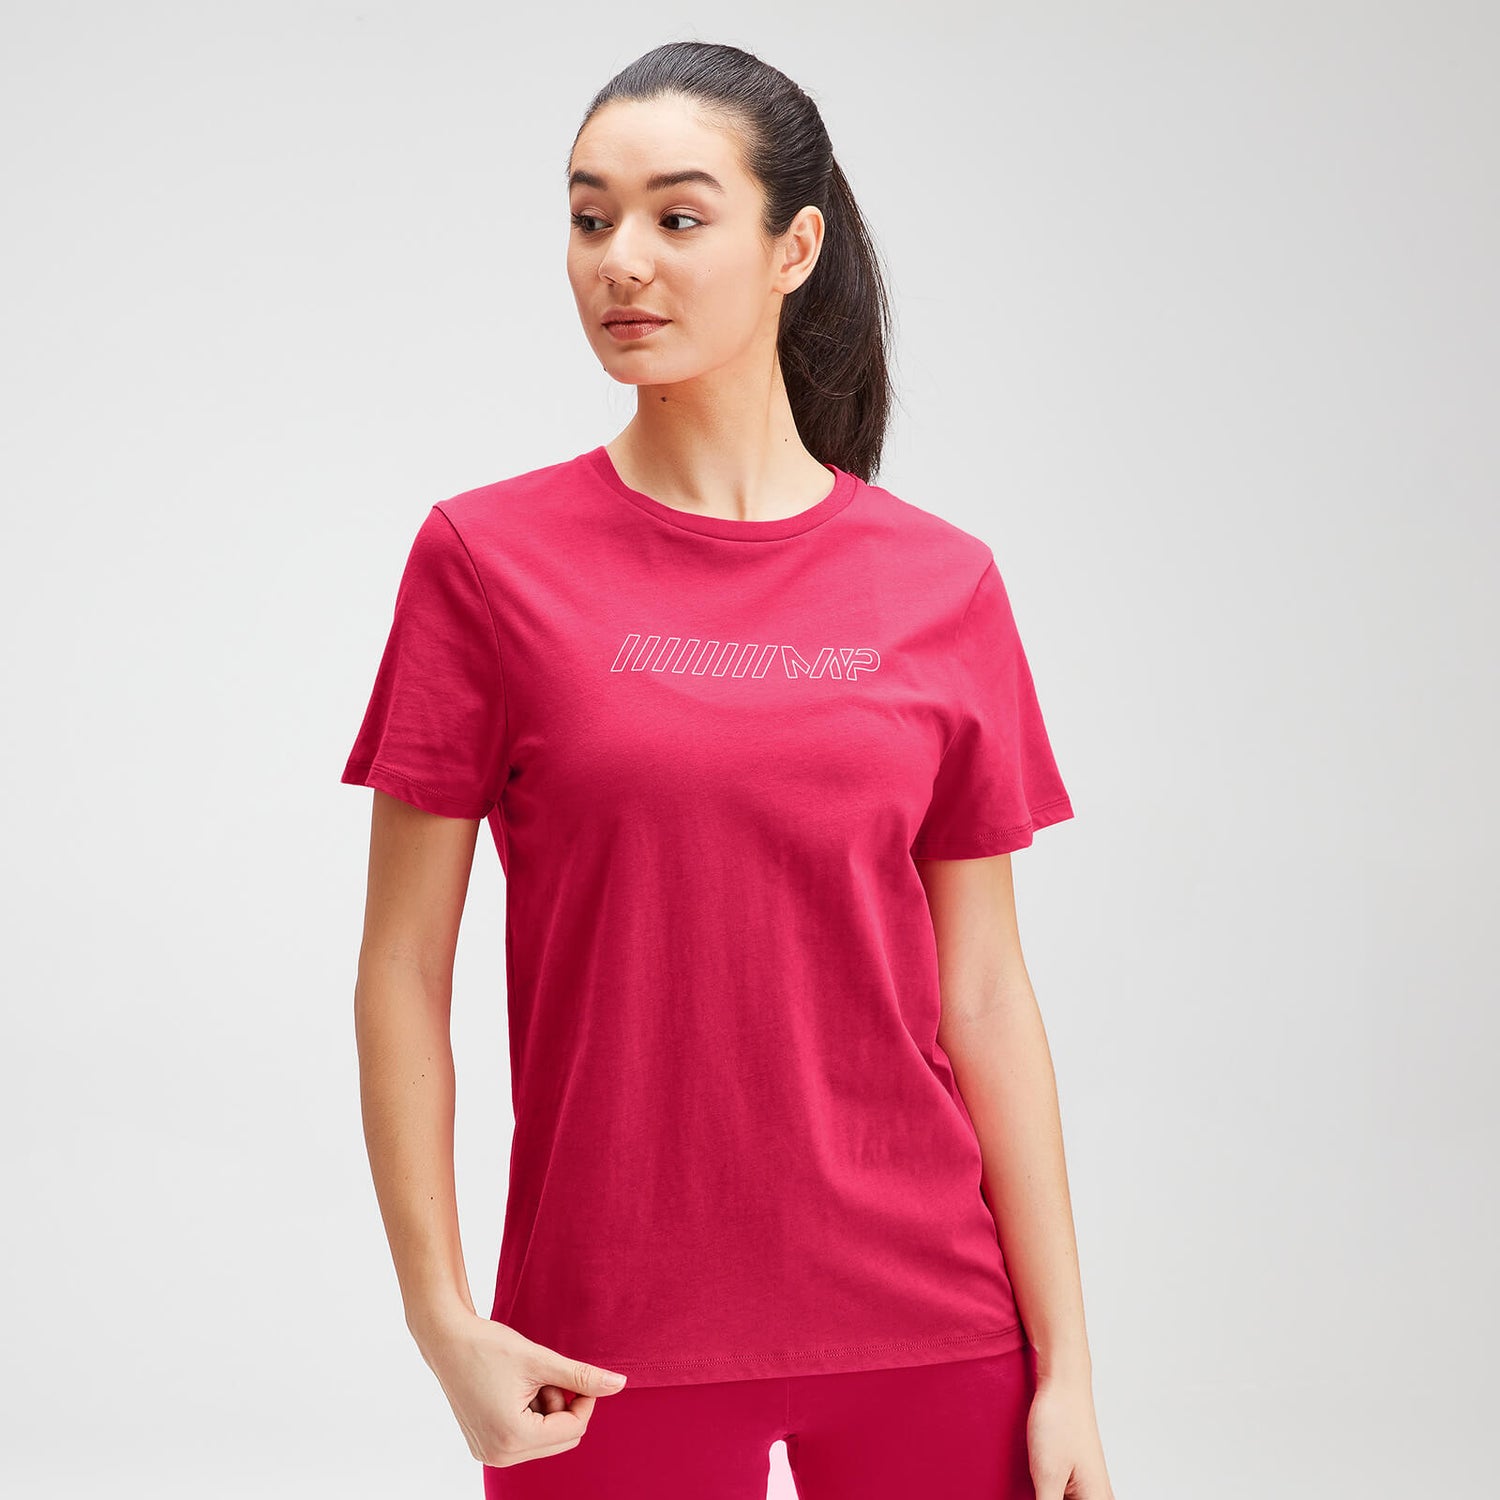 MP Women's Outline Graphic T-Shirt - Virtual Pink - XXS